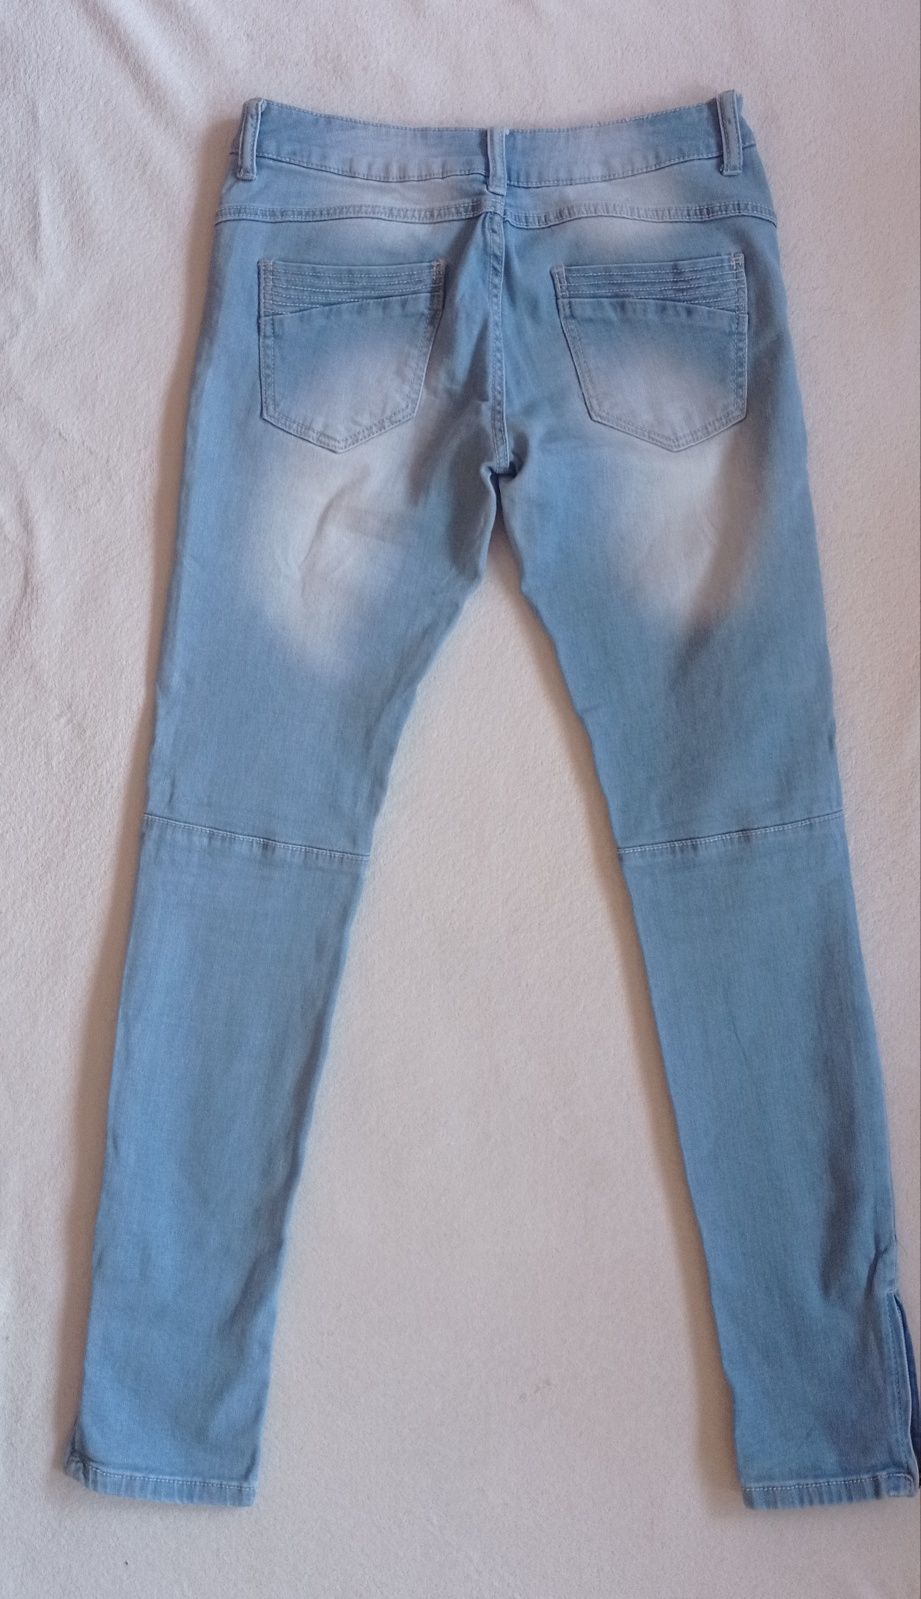 Jasne jeansy rurki Reserved slim z zamkami 38 S slim